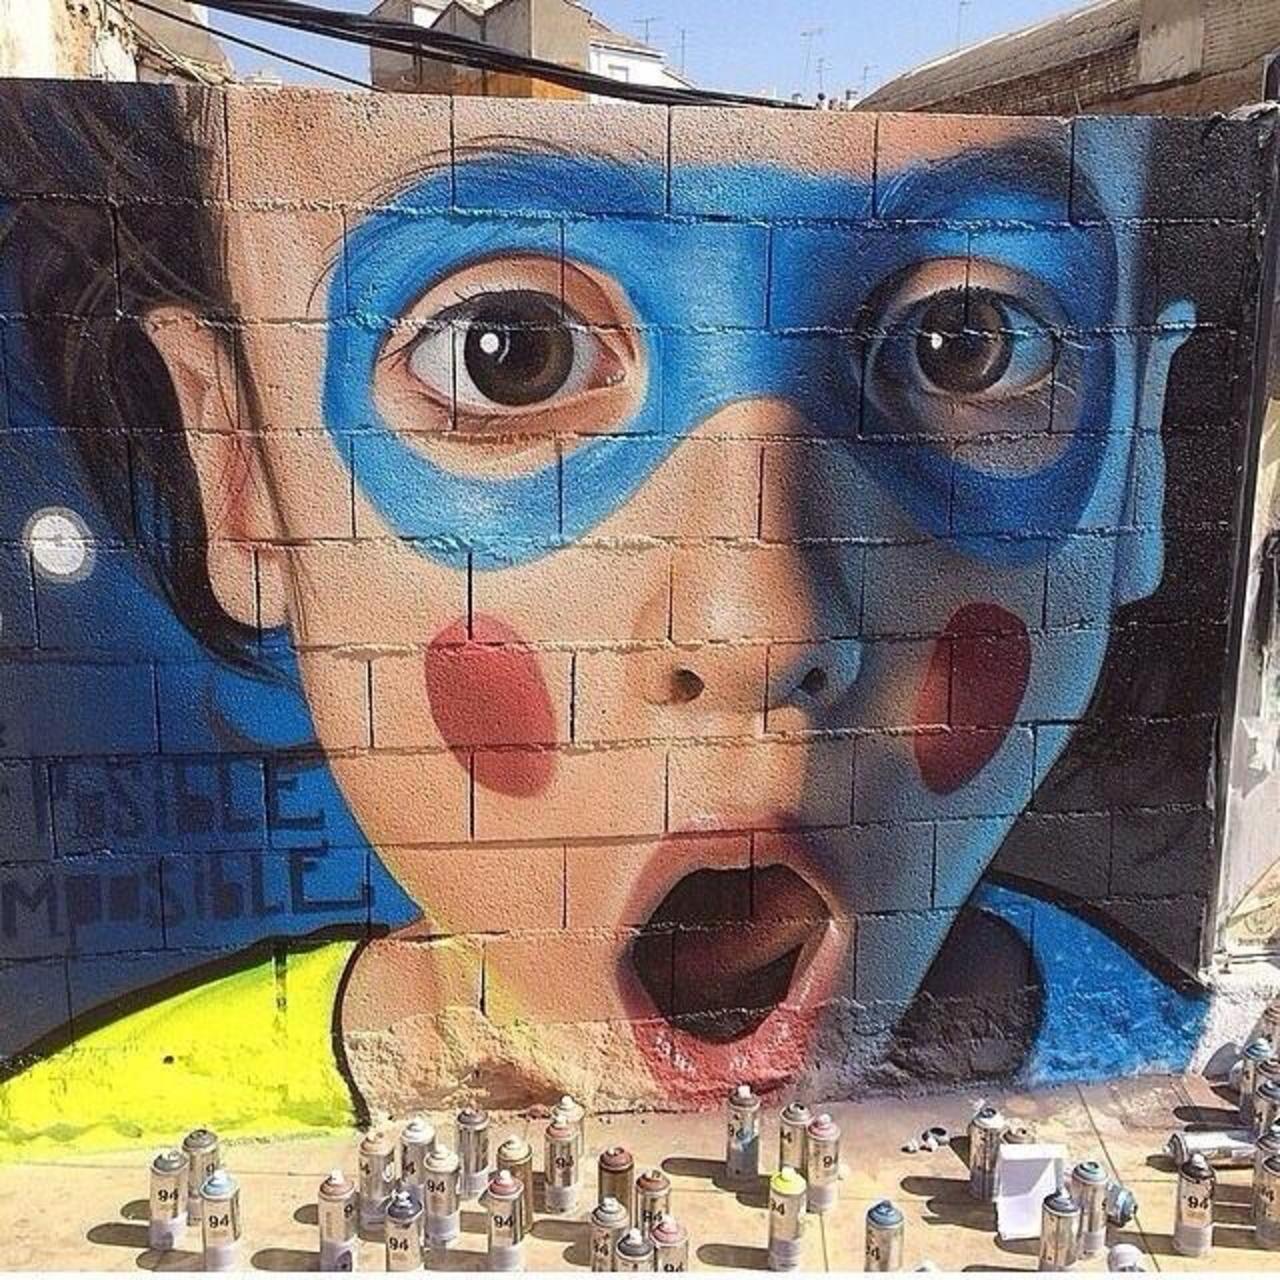 Artist @Belinwan unique Street Art portrait piece located in Linares, Spain #art #mural #graffiti #streetart http://t.co/6epDZ6qXwM